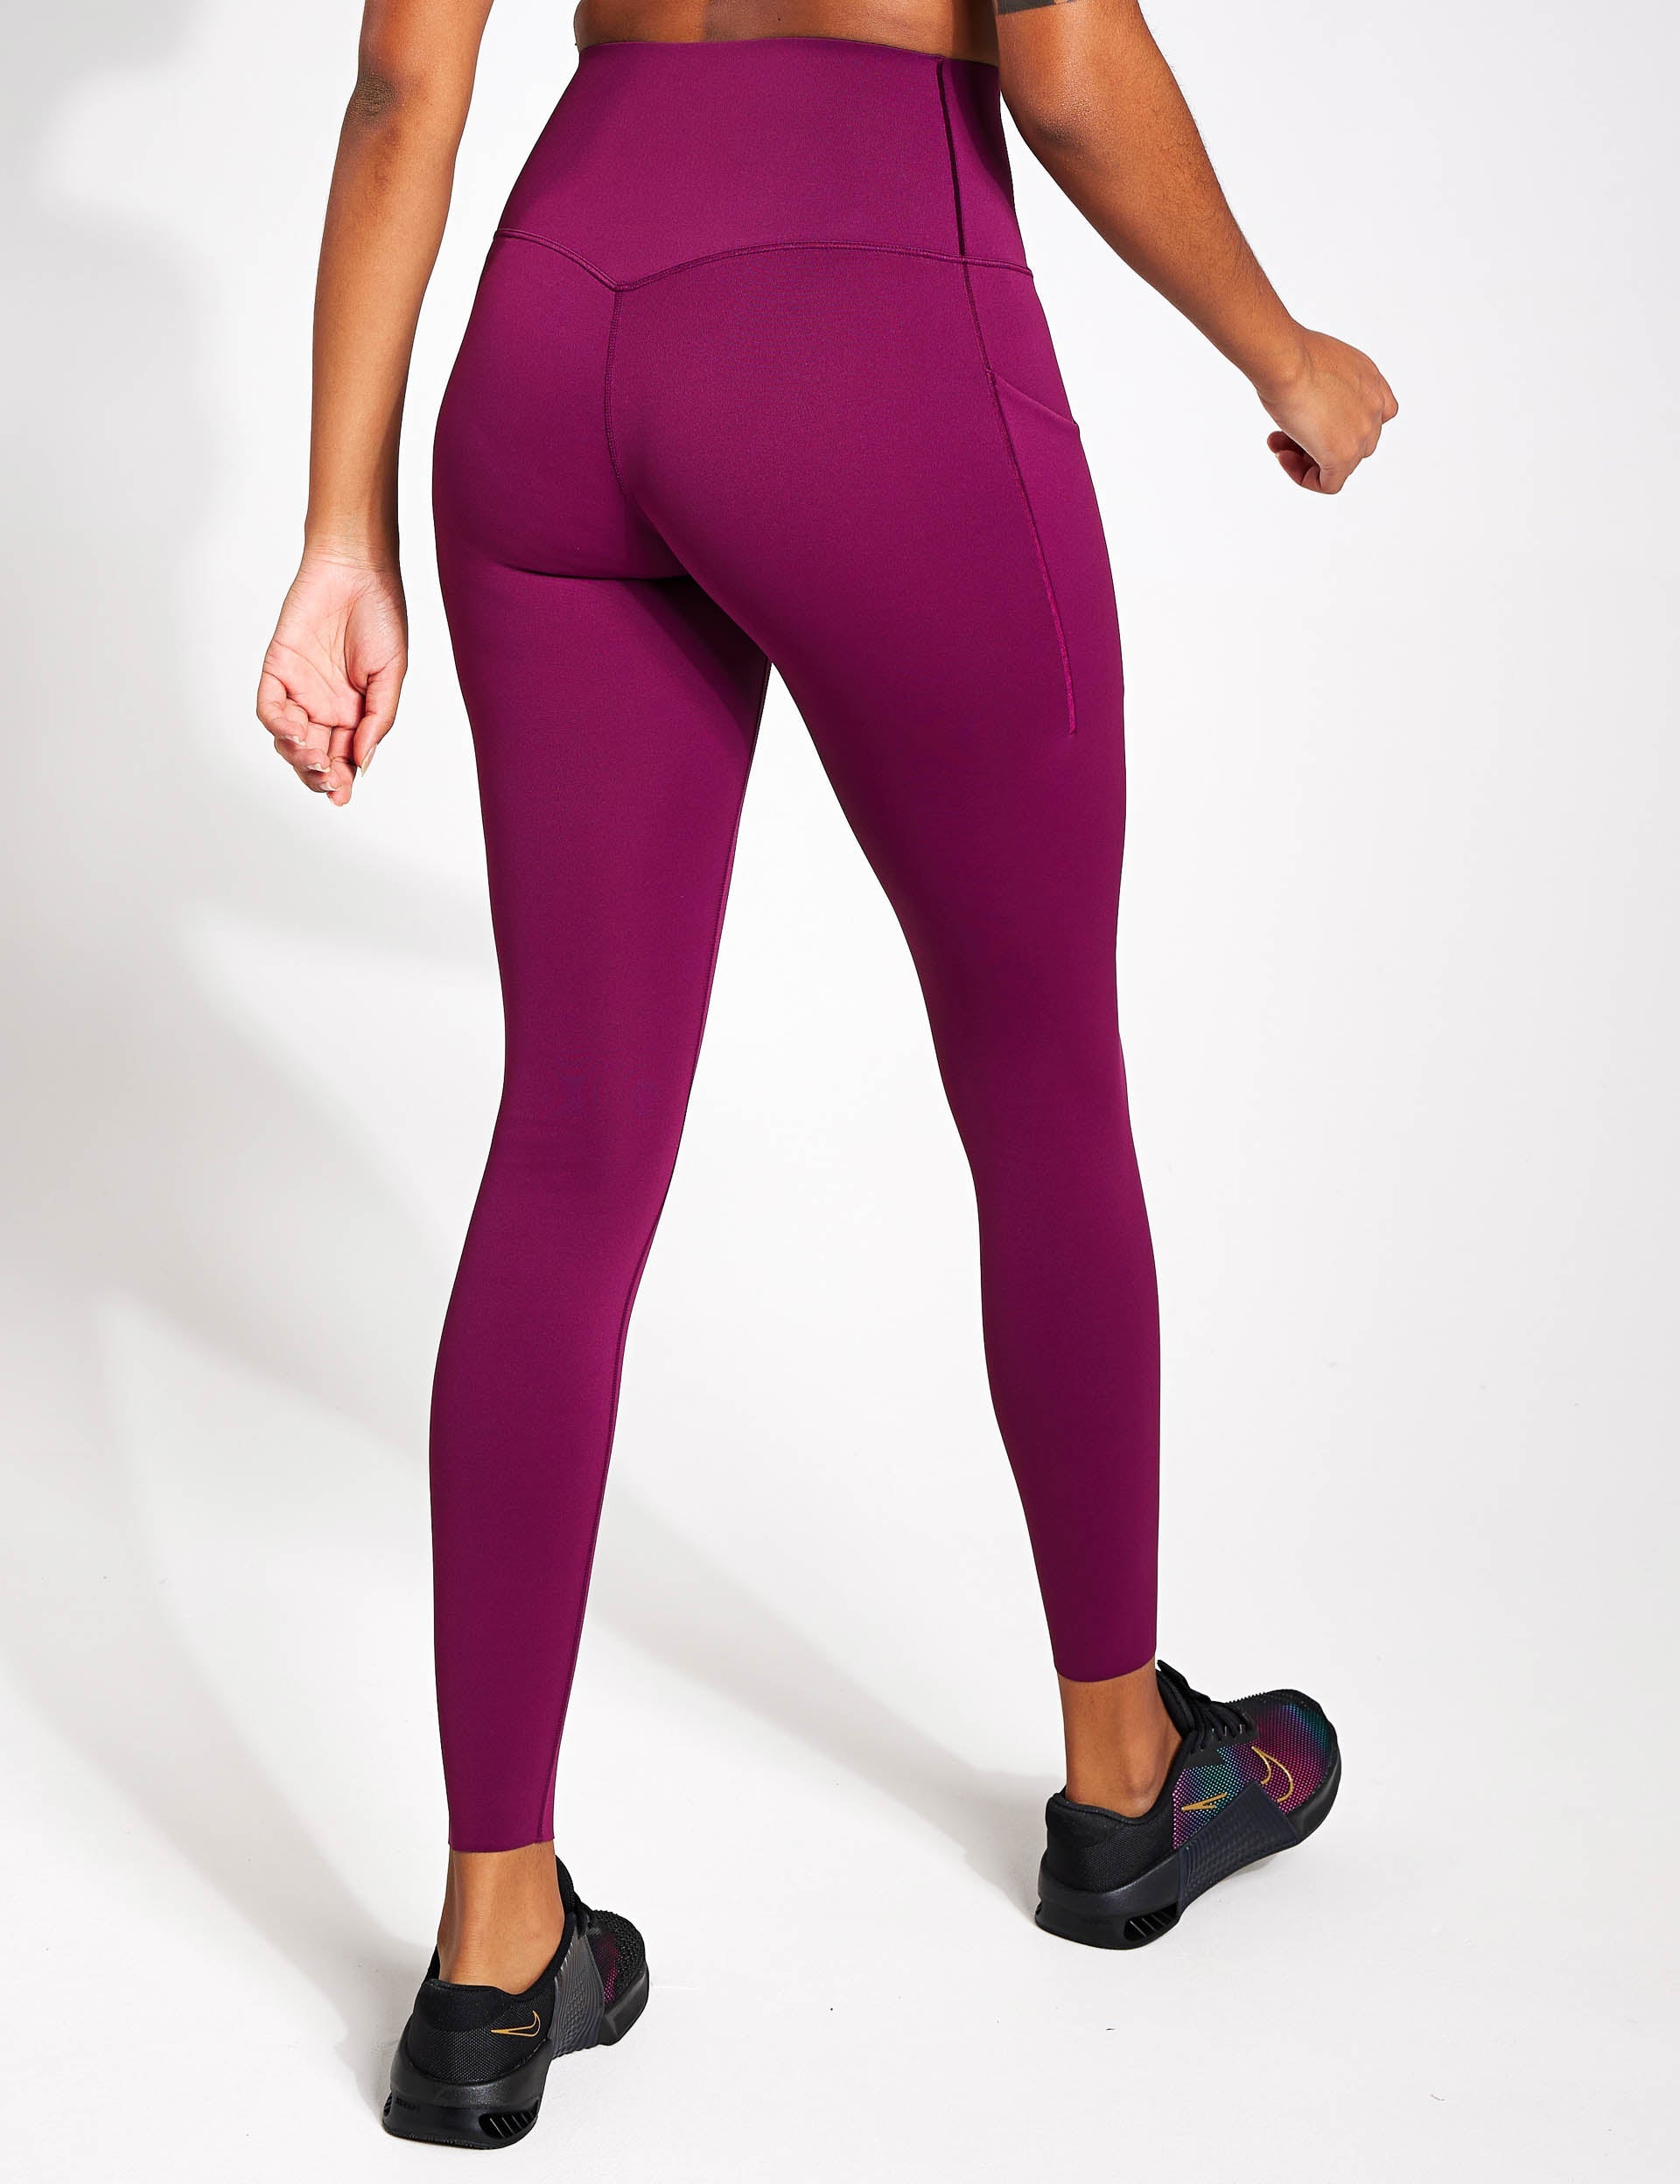 Nike Womens Universa 7/8 Leggings - Purple